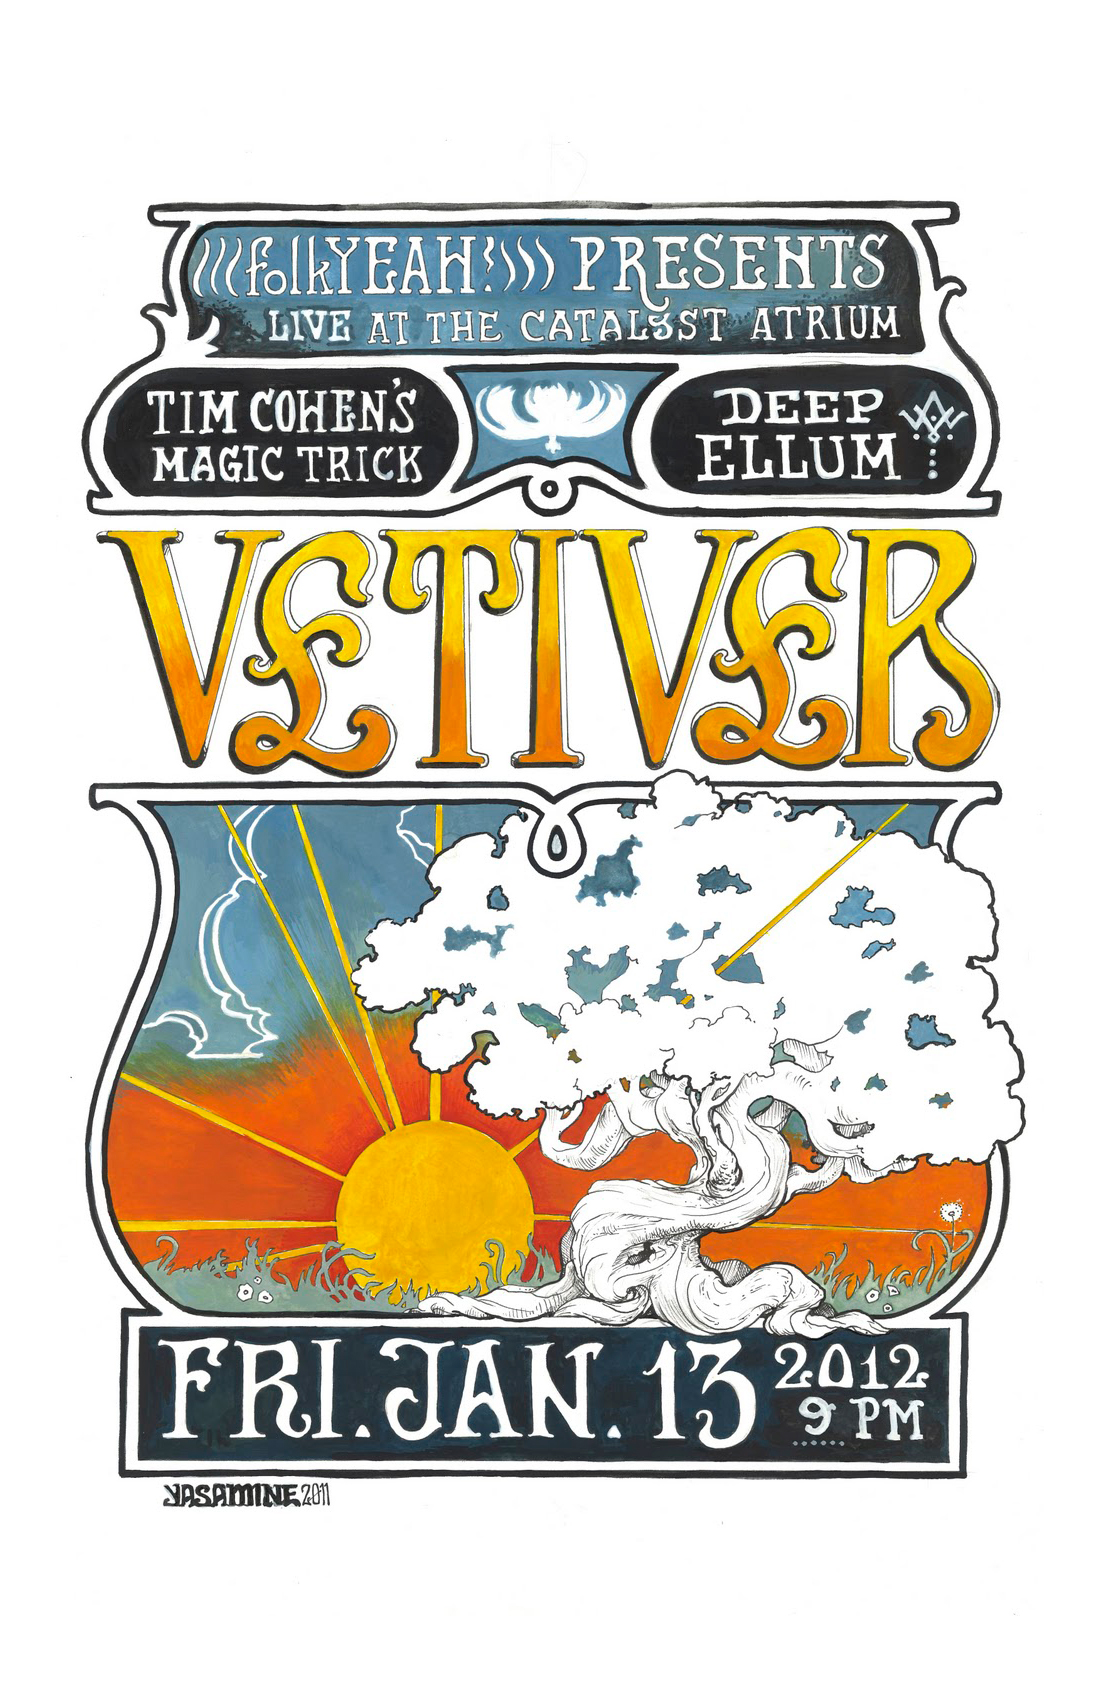   Concert Poster for Vetiver  